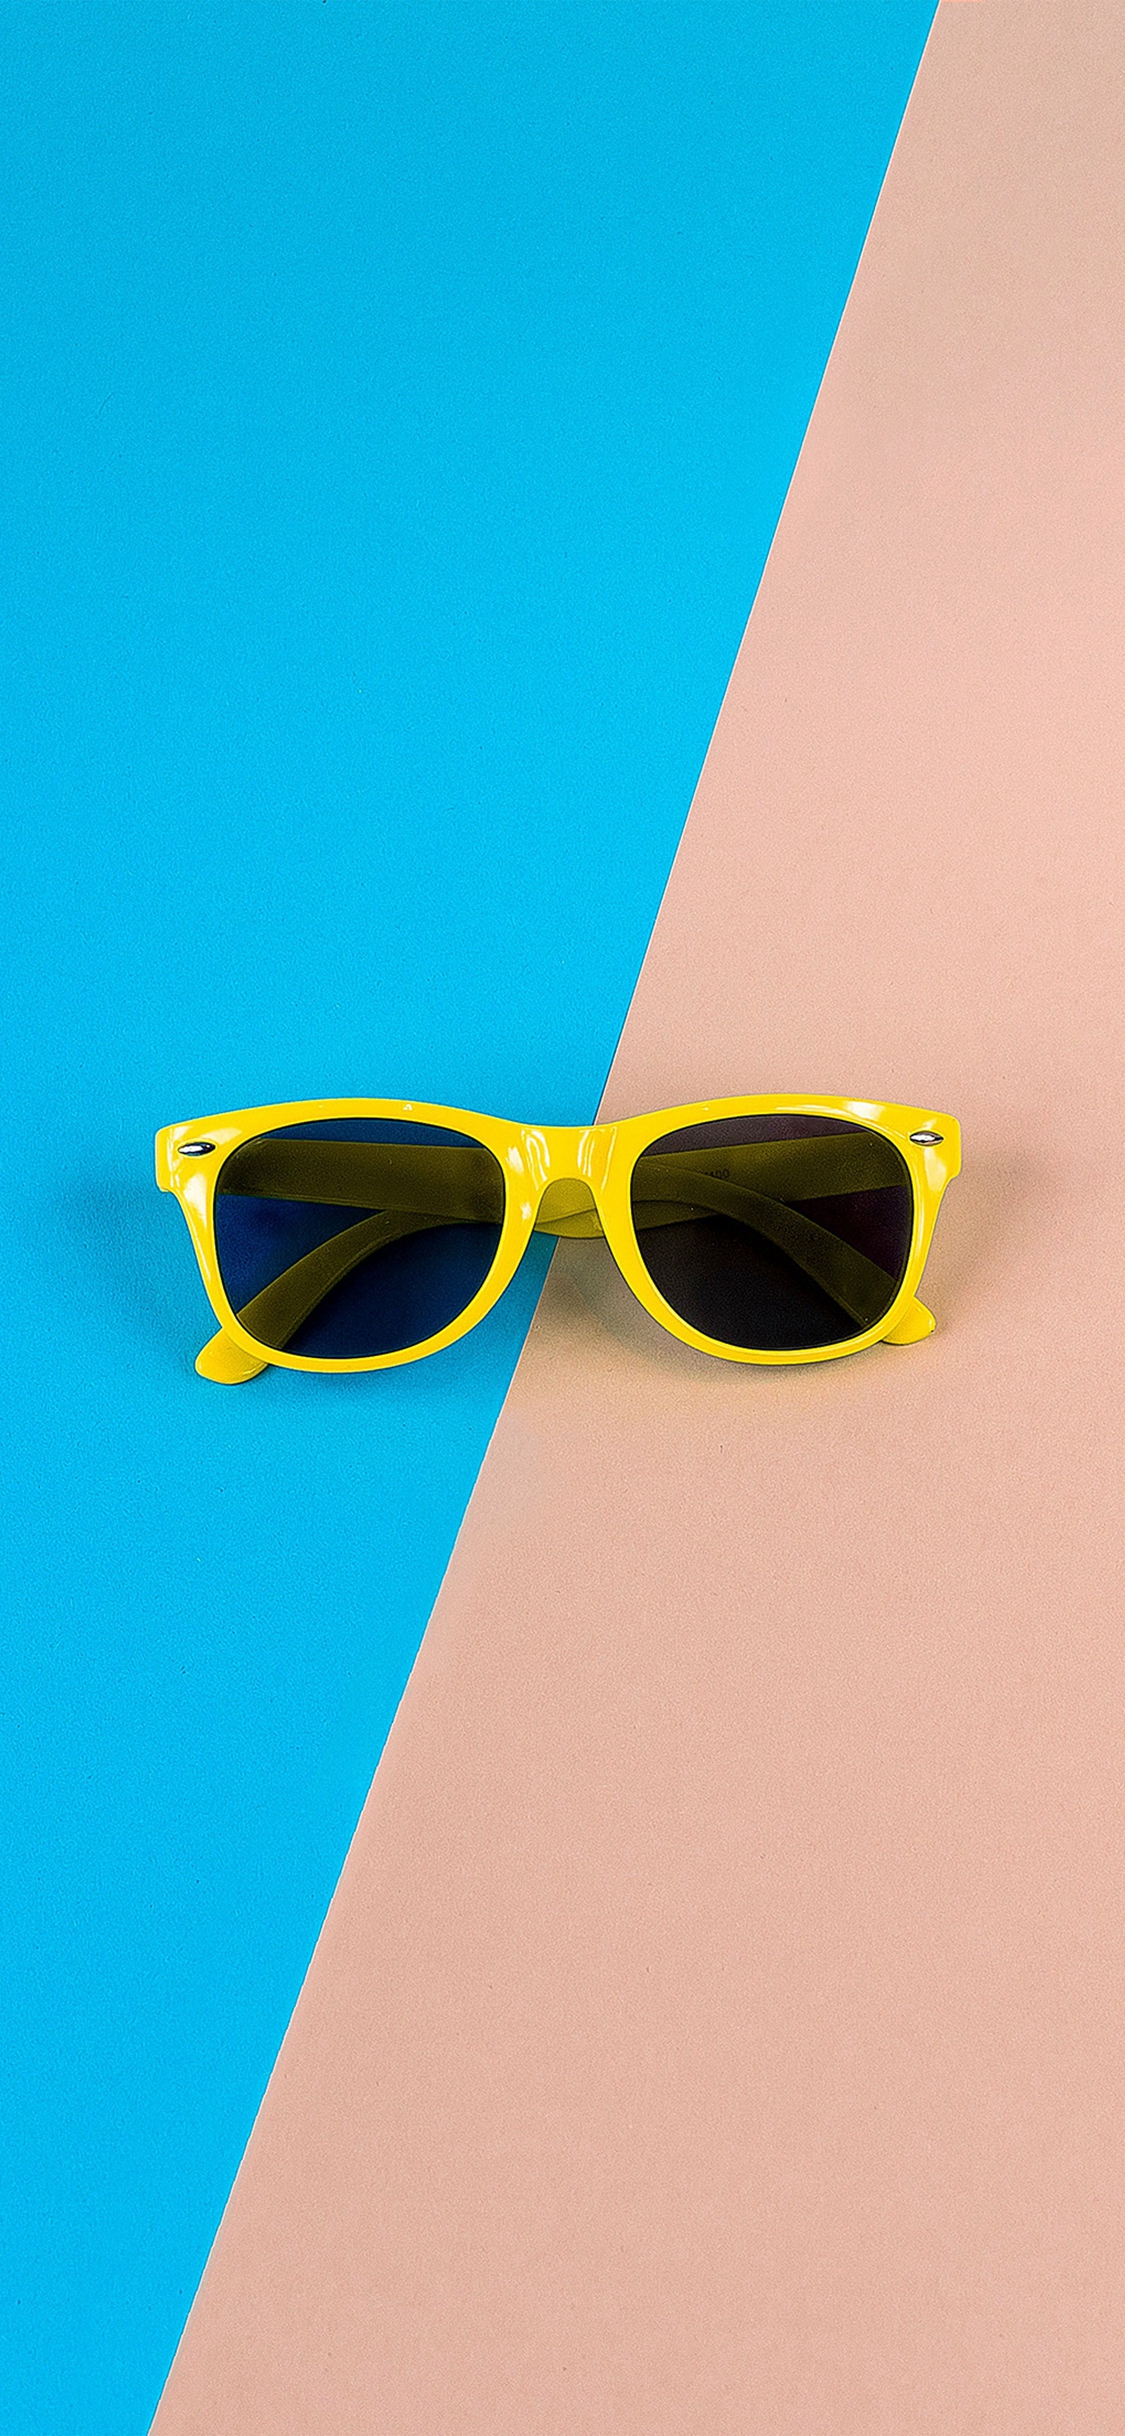 Minimal Glasses Pink Blue Yellow iPhone X Wallpaper Free Download